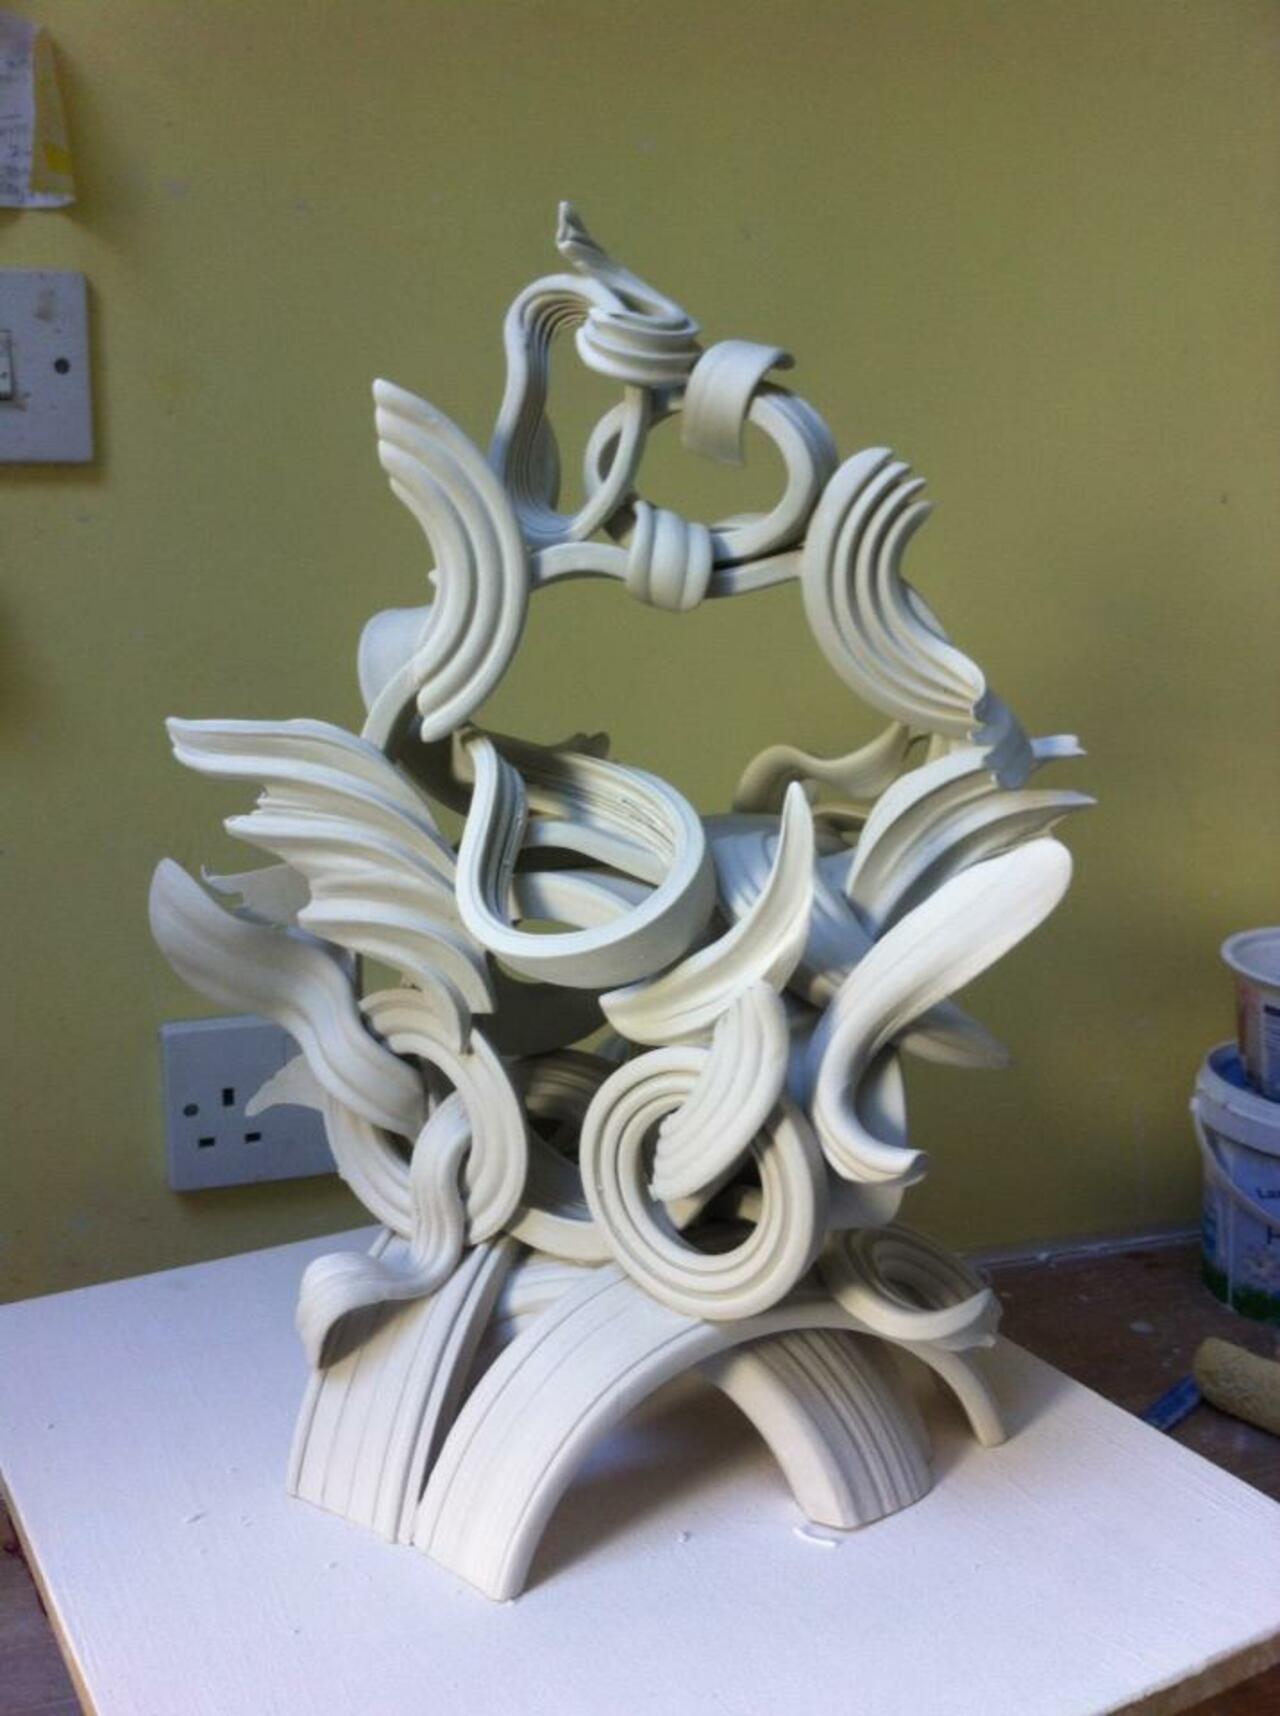 Today's #porcelain #sculpture #todayimmaking #ceramics http://t.co/xmJwshnum7